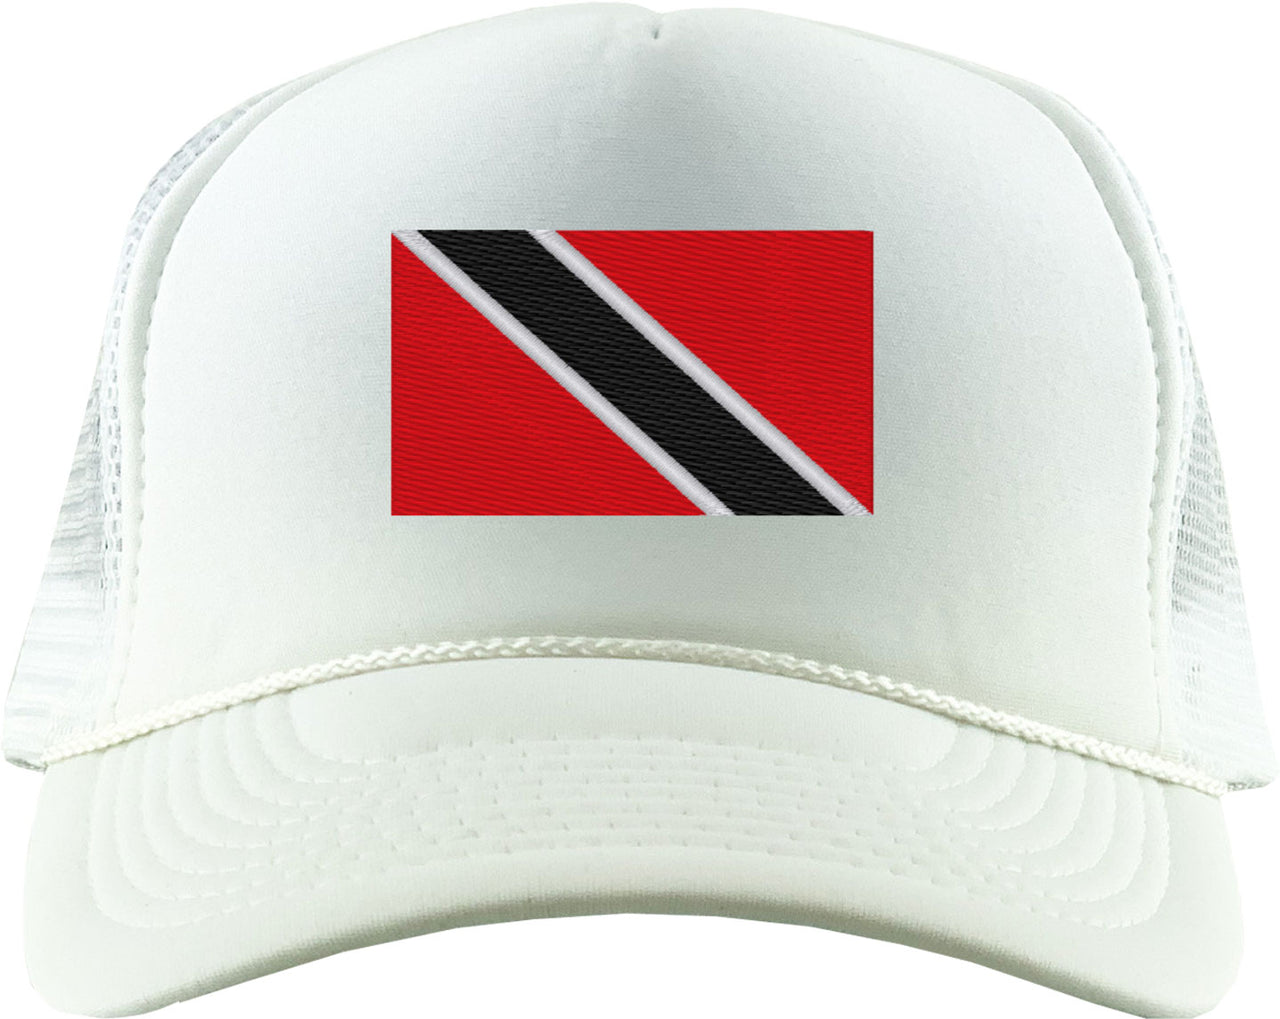 Trinidad And Tobago Flag Foam Trucker Hat